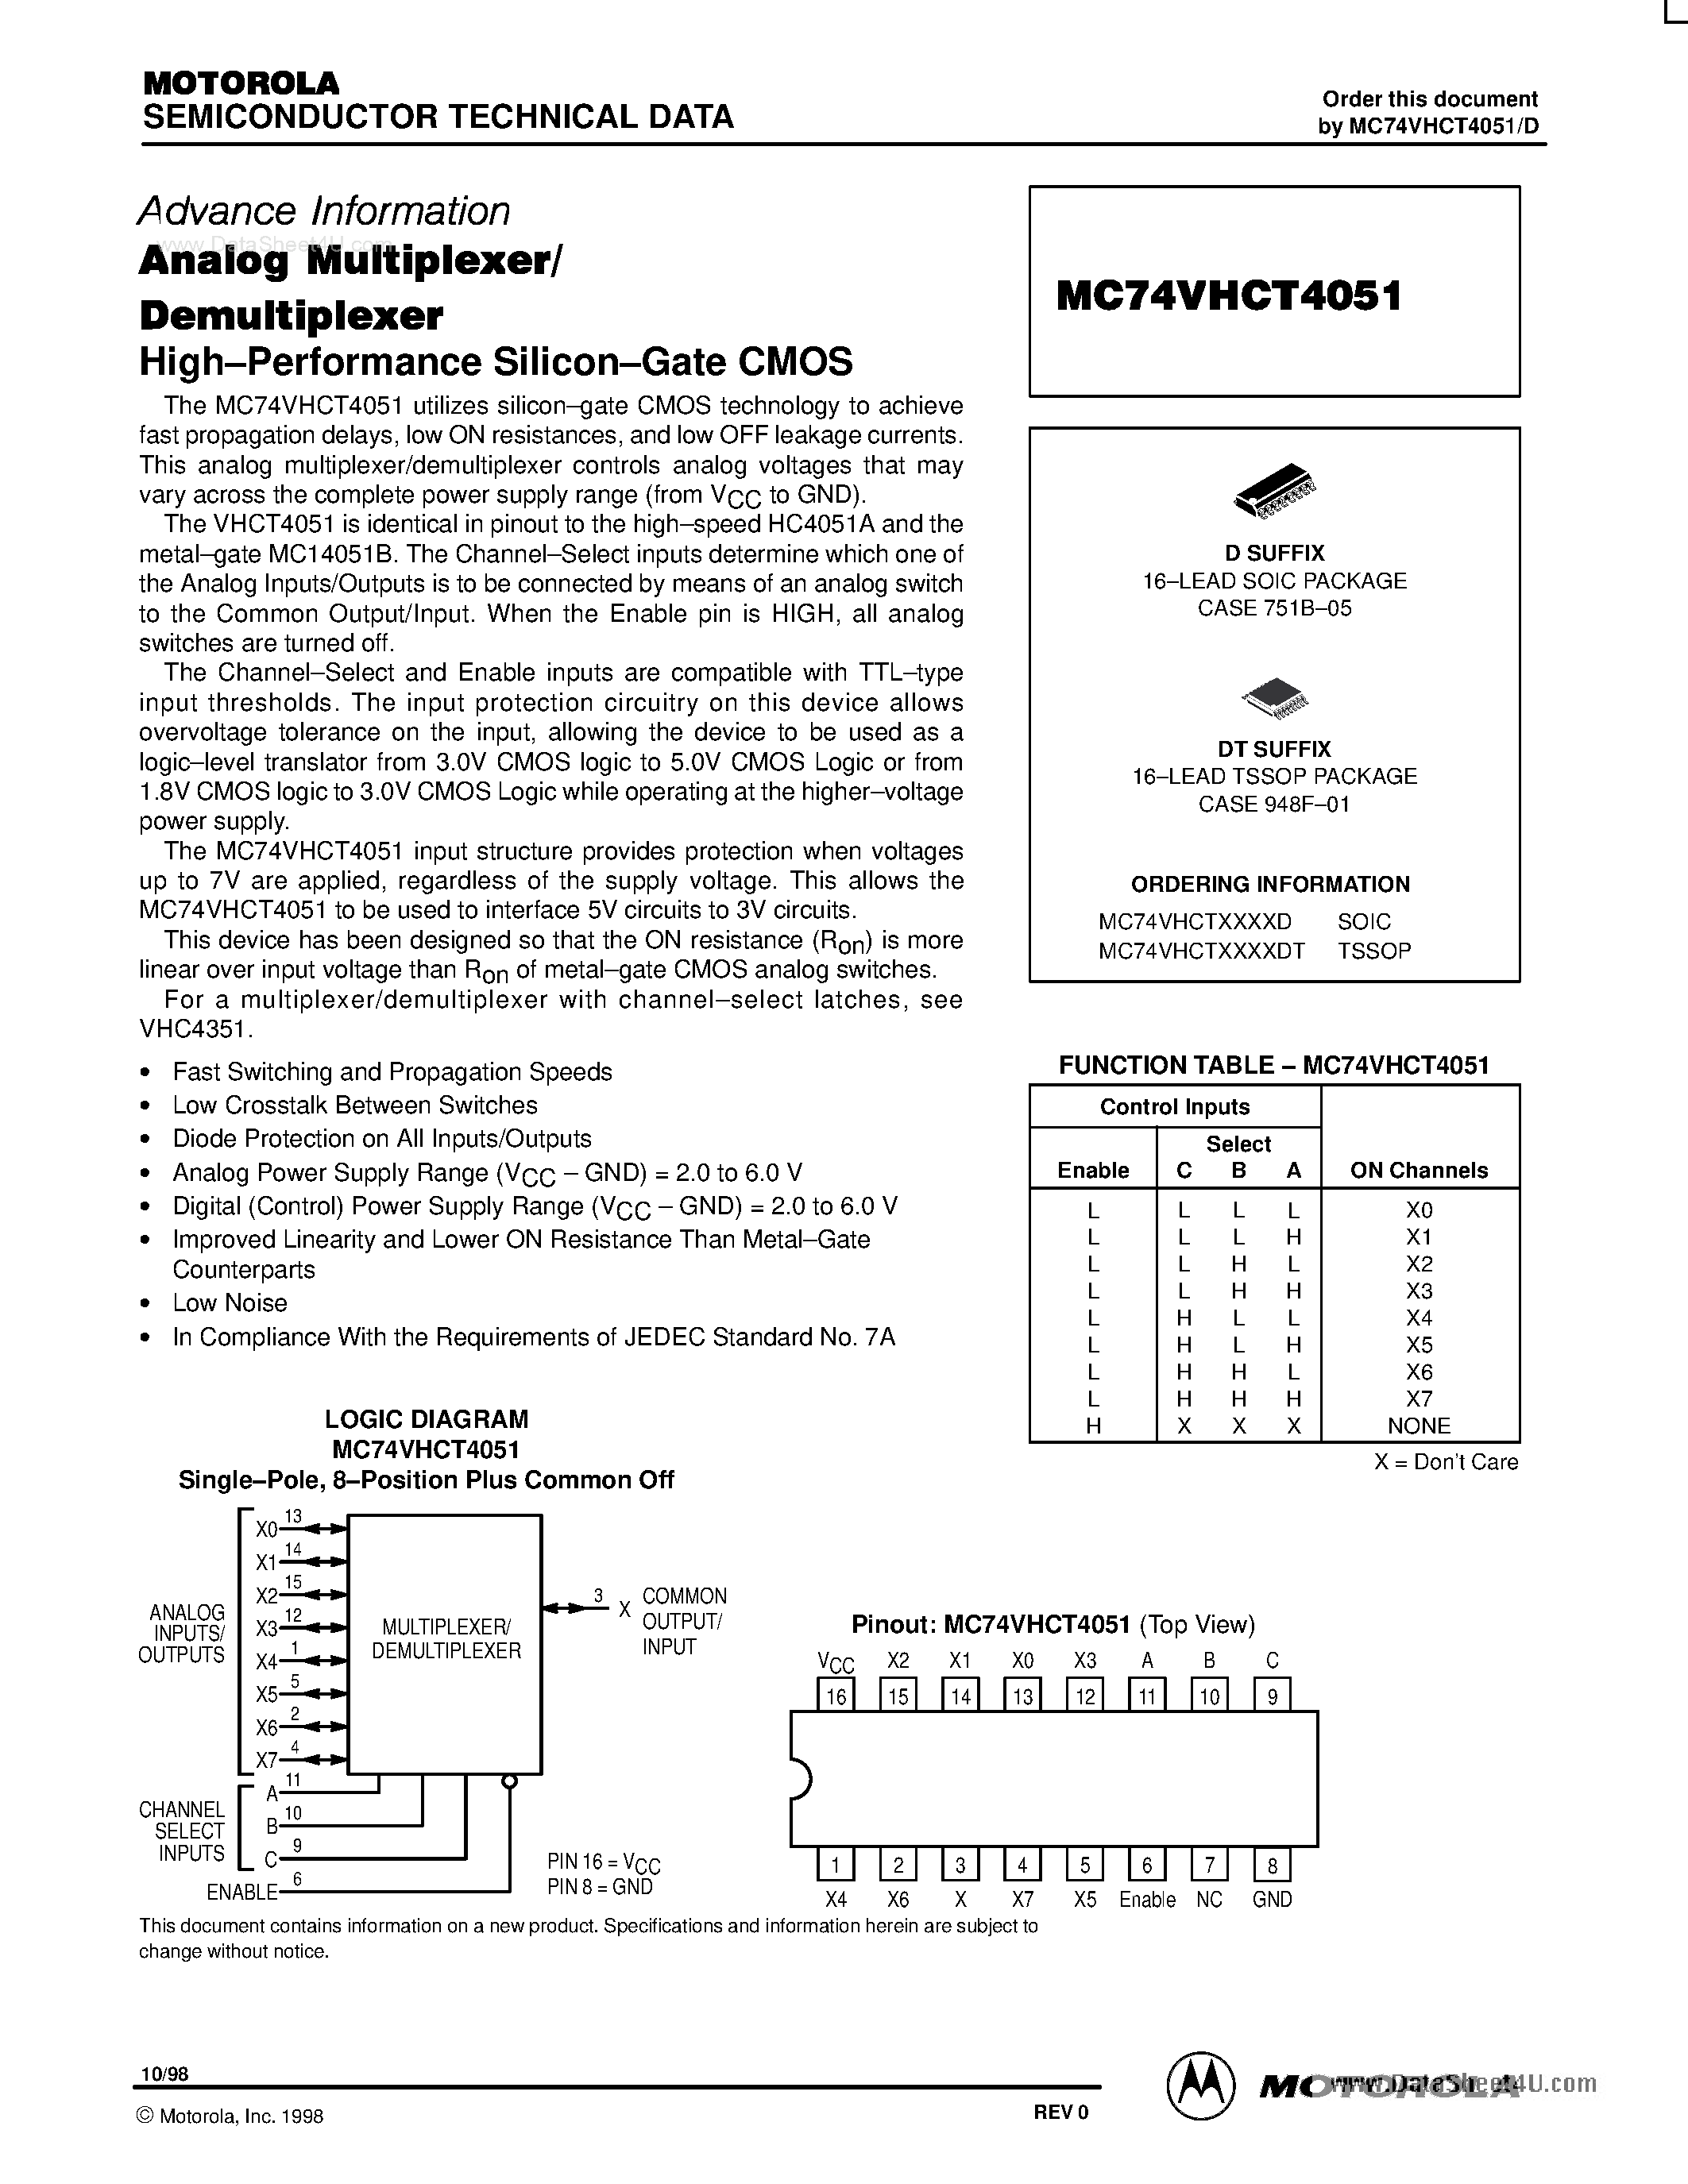 Datasheet MC74VHT4051 - Analog Multiplexer Demultiplexer page 1